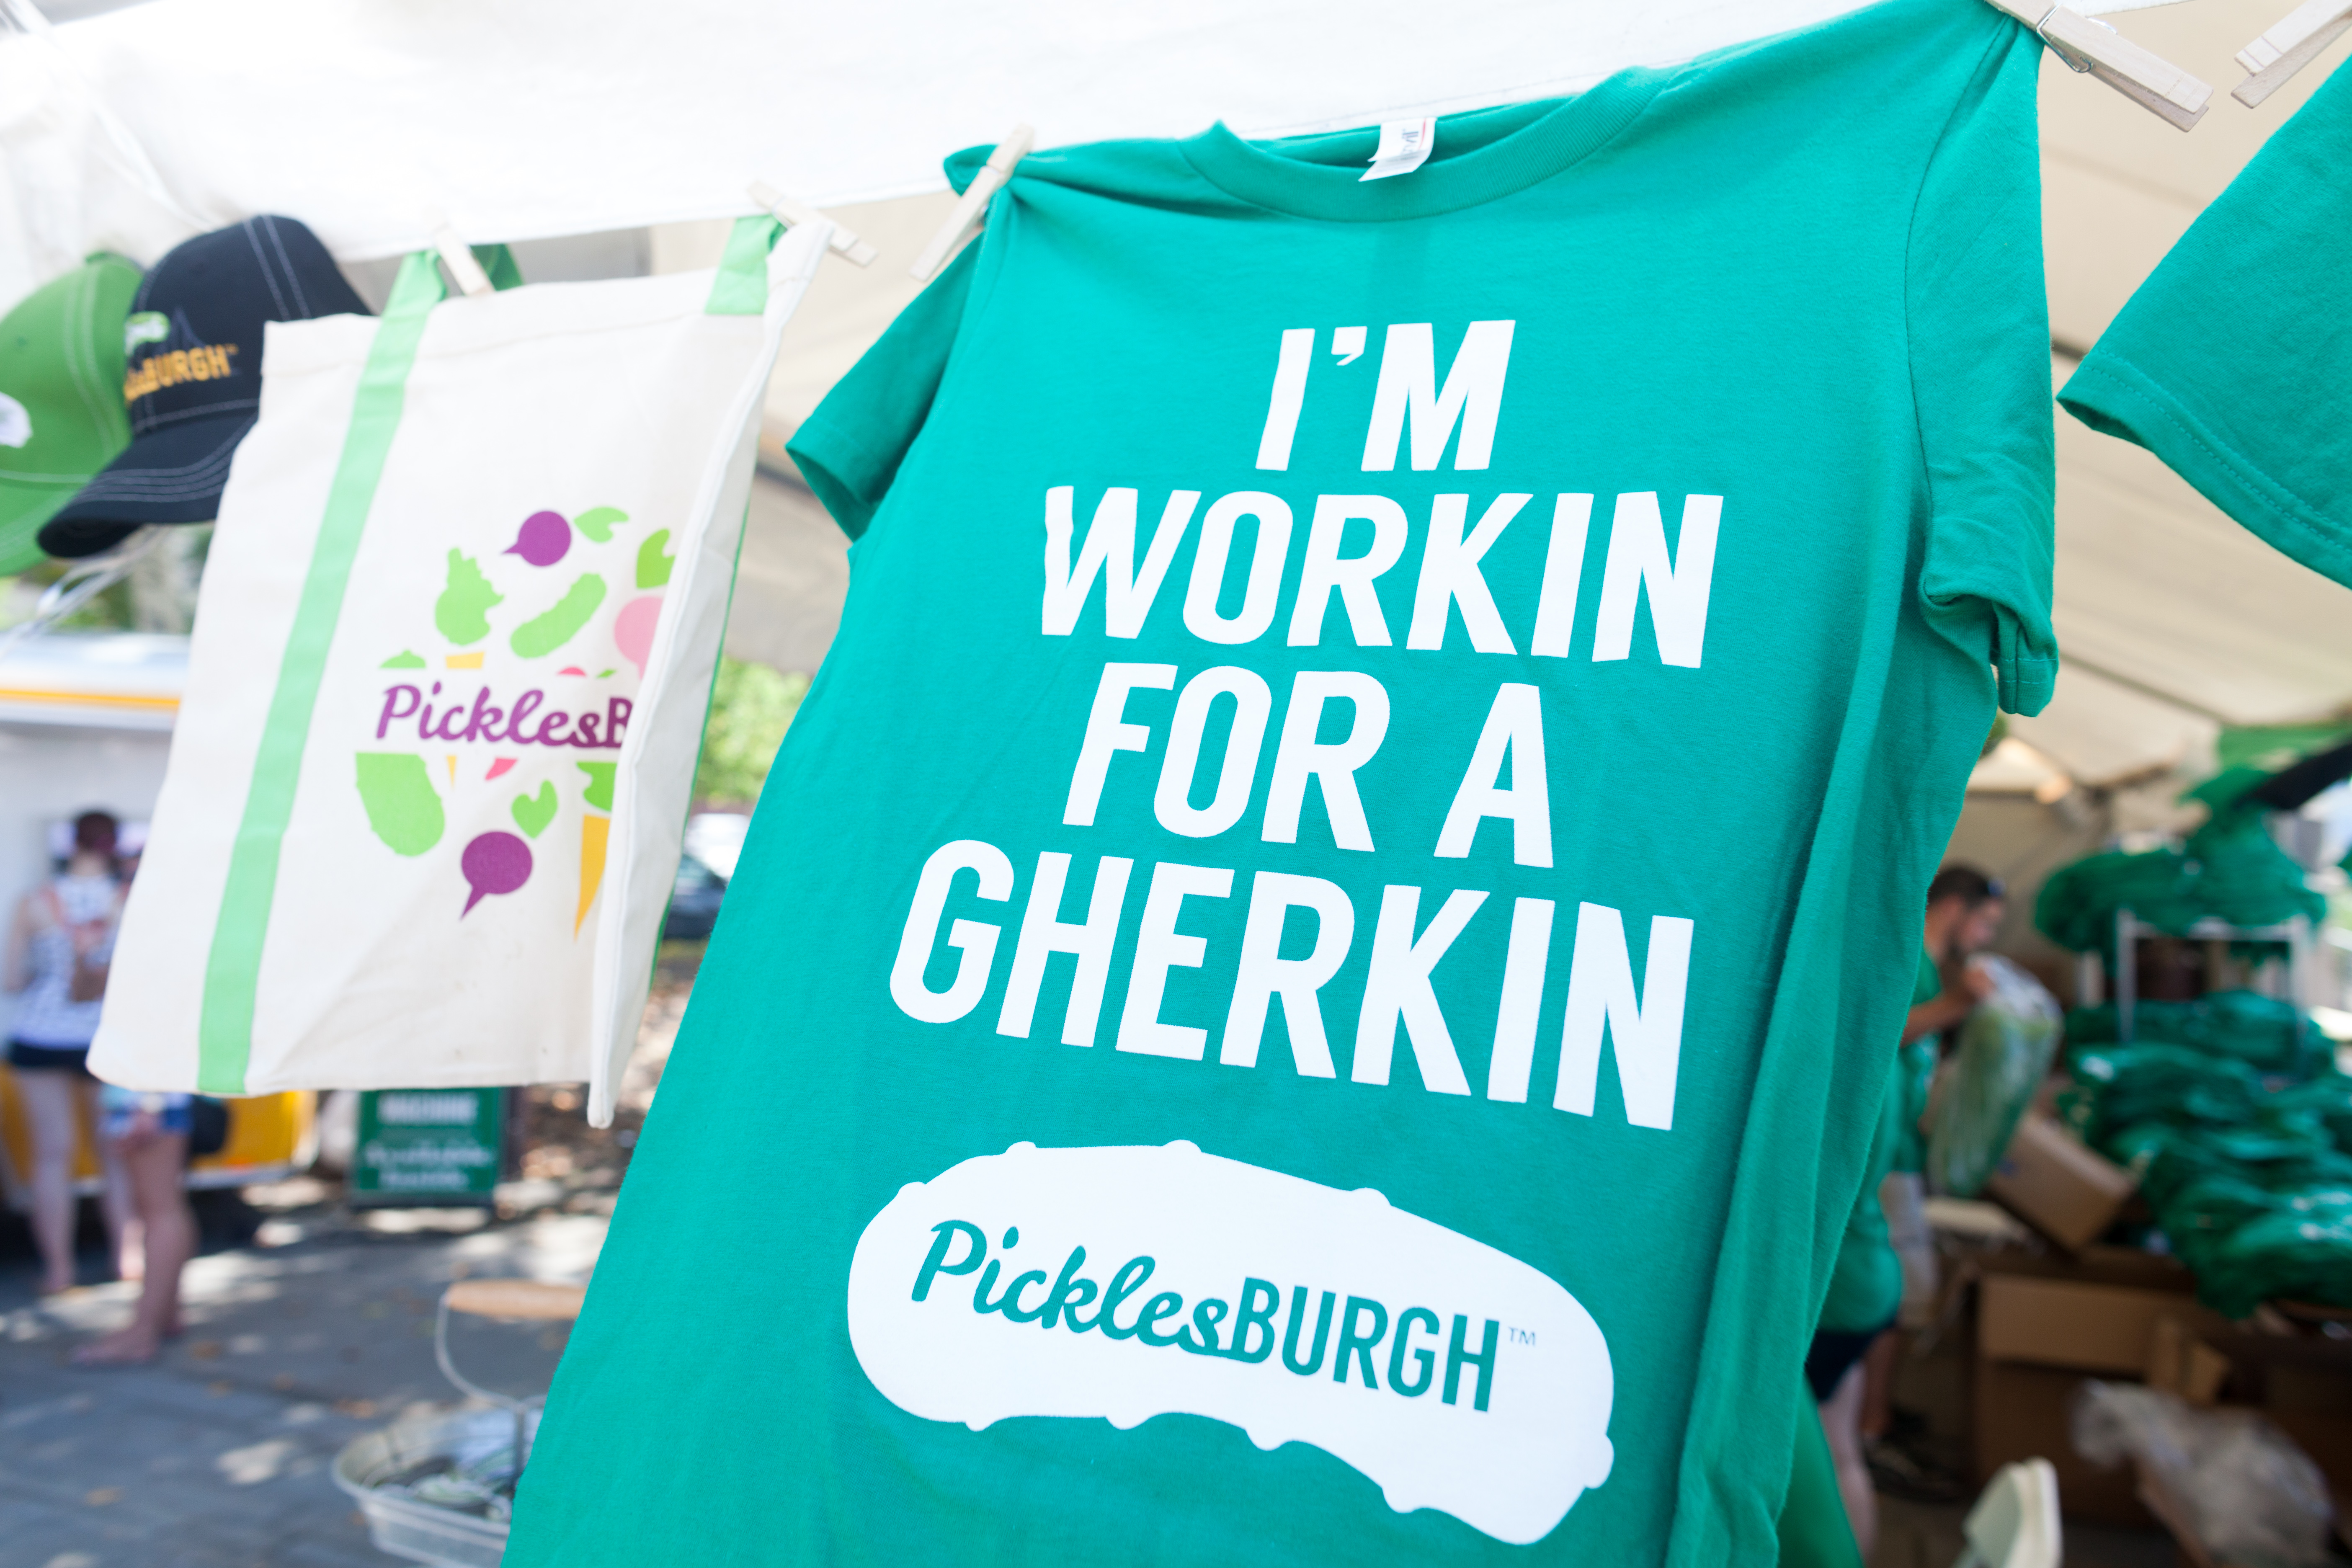 Picklesburgh merchandise